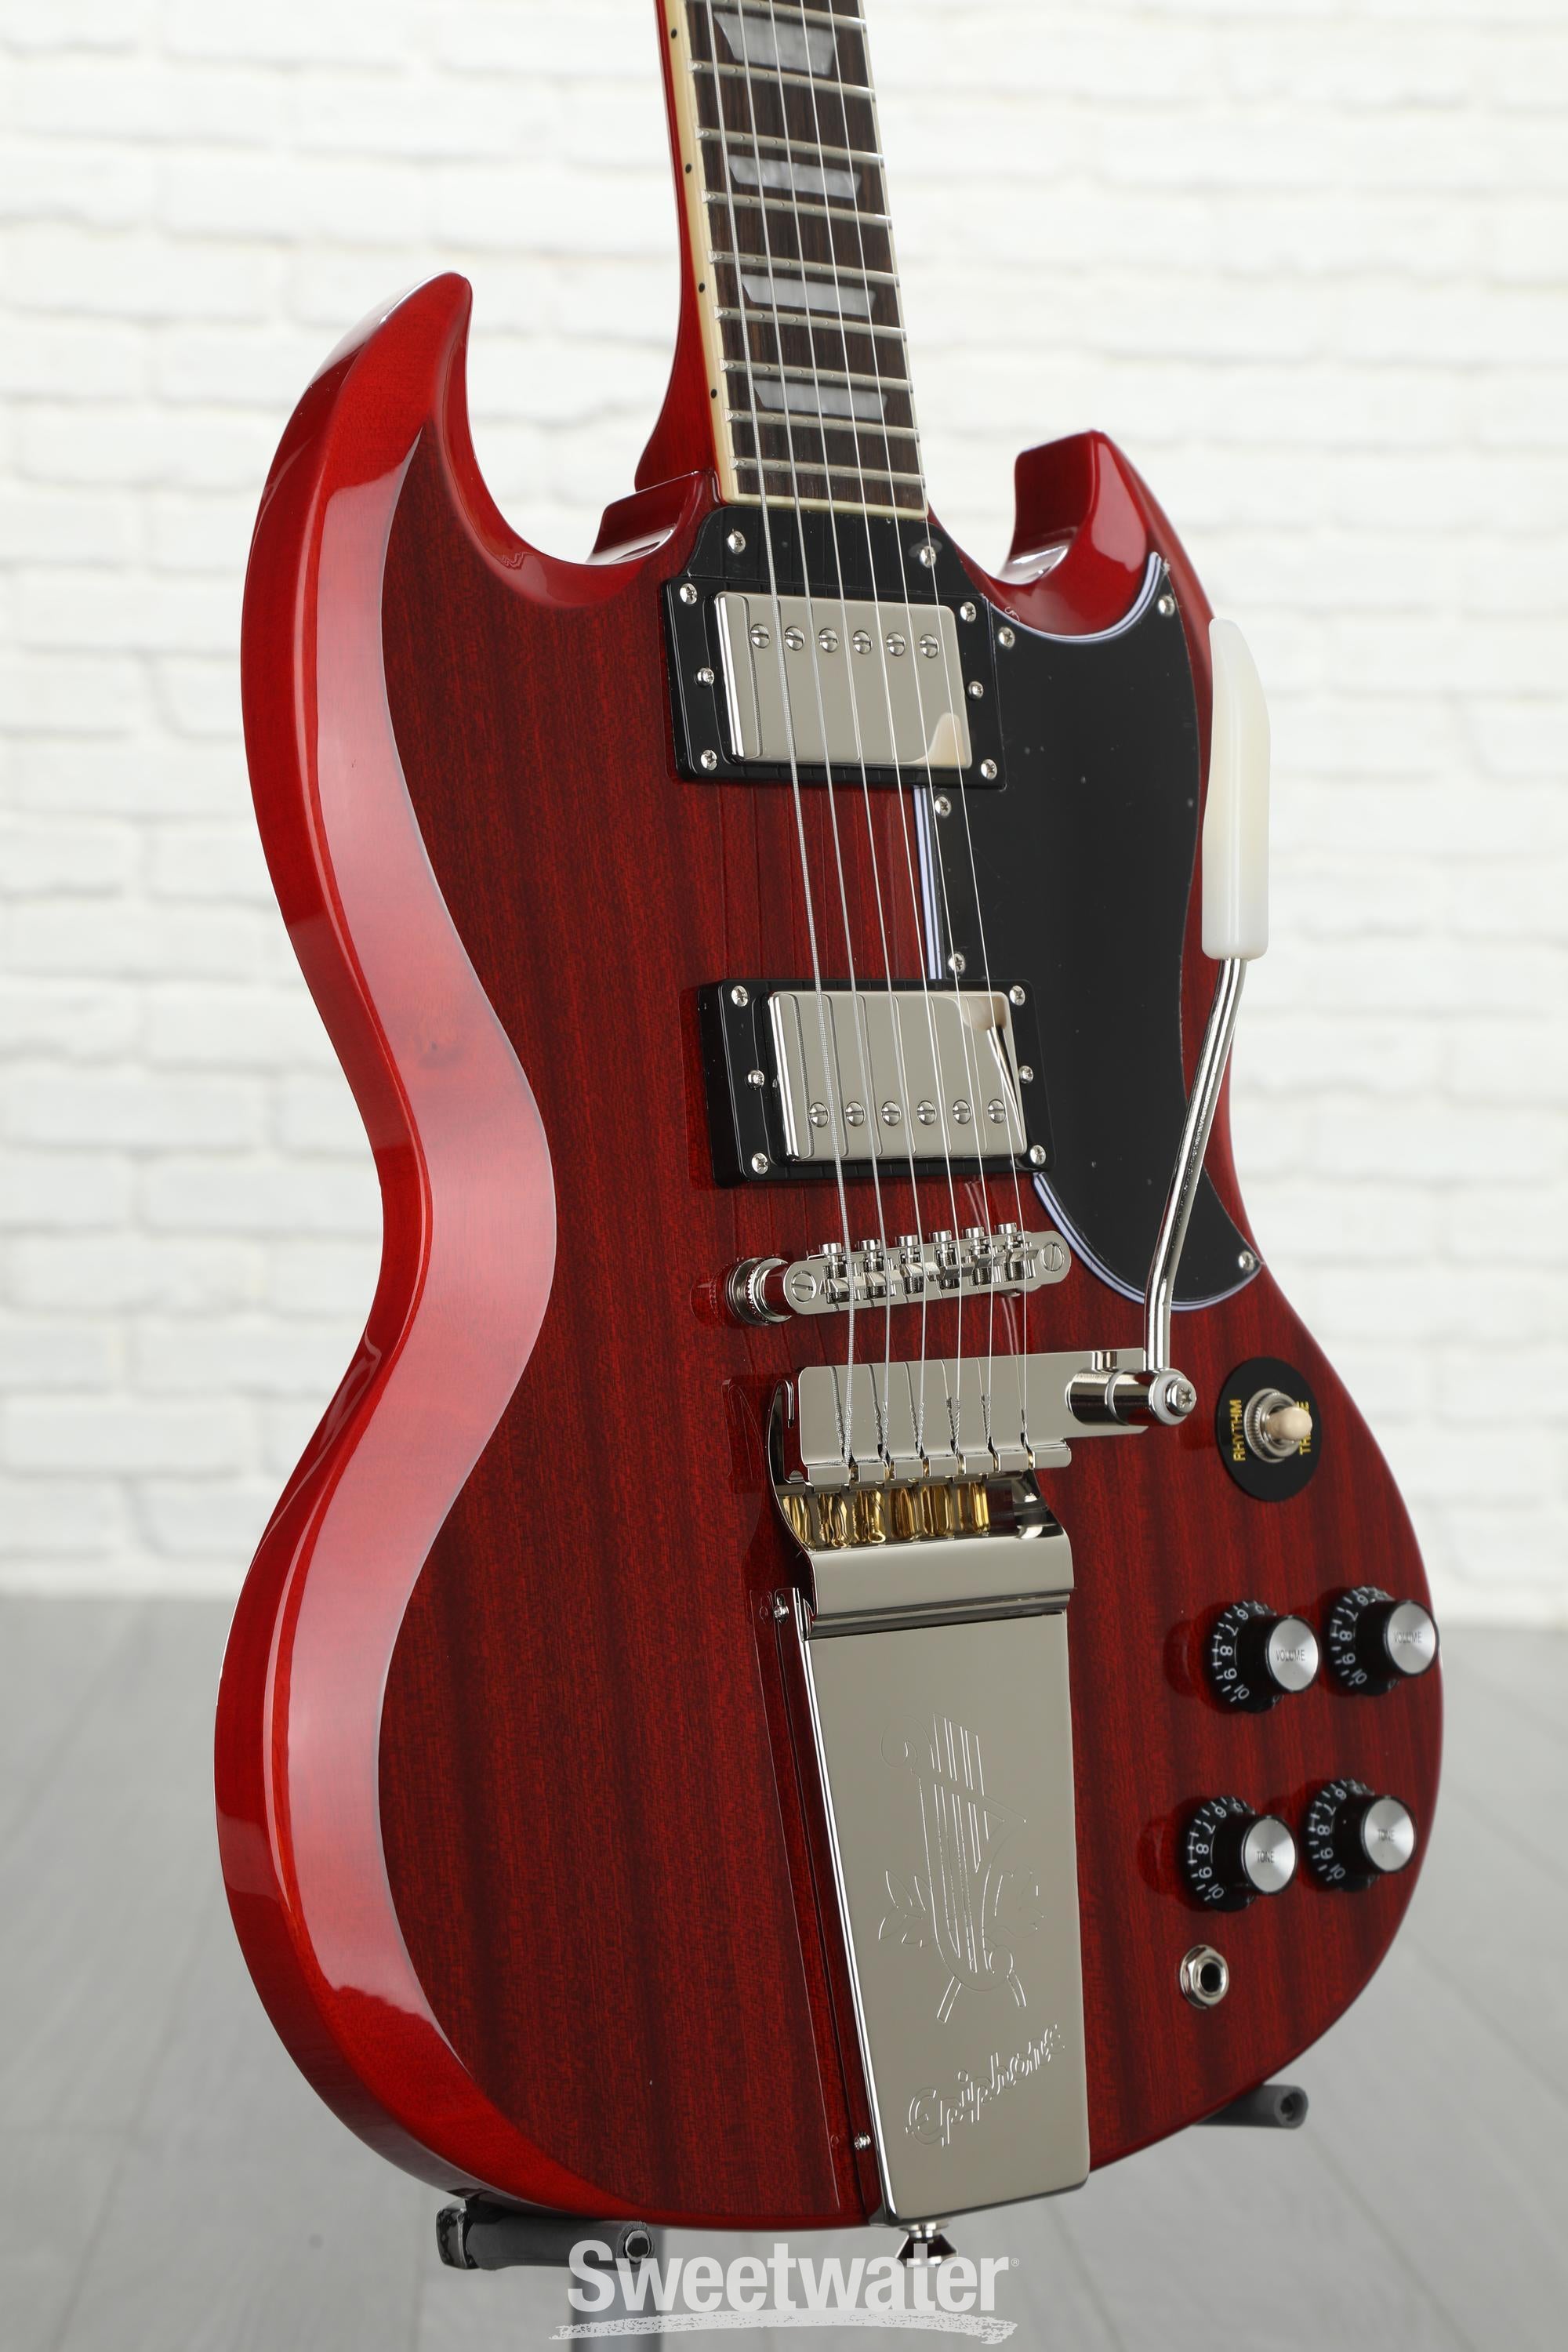 Epiphone SG Standard '61 Maestro Vibrola Electric Guitar - Vintage Cherry